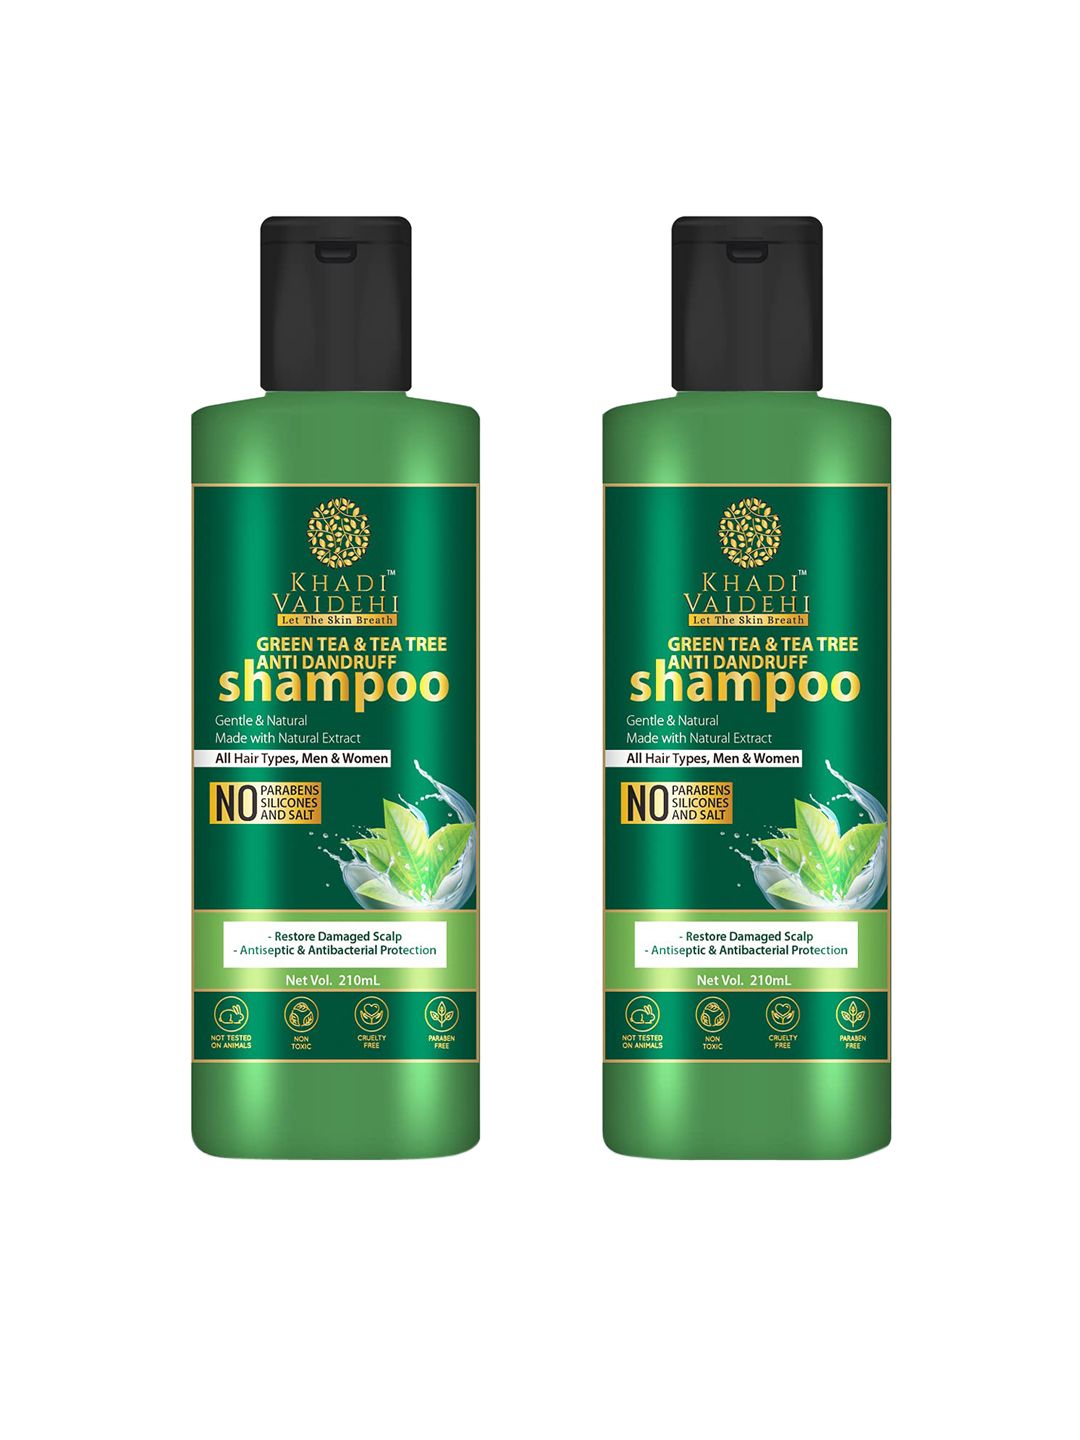 Khadi Vaidehi Set of 2 Green Tea & Tea Tree Anti-Dandruff Shampoo - 210 ml each Price in India